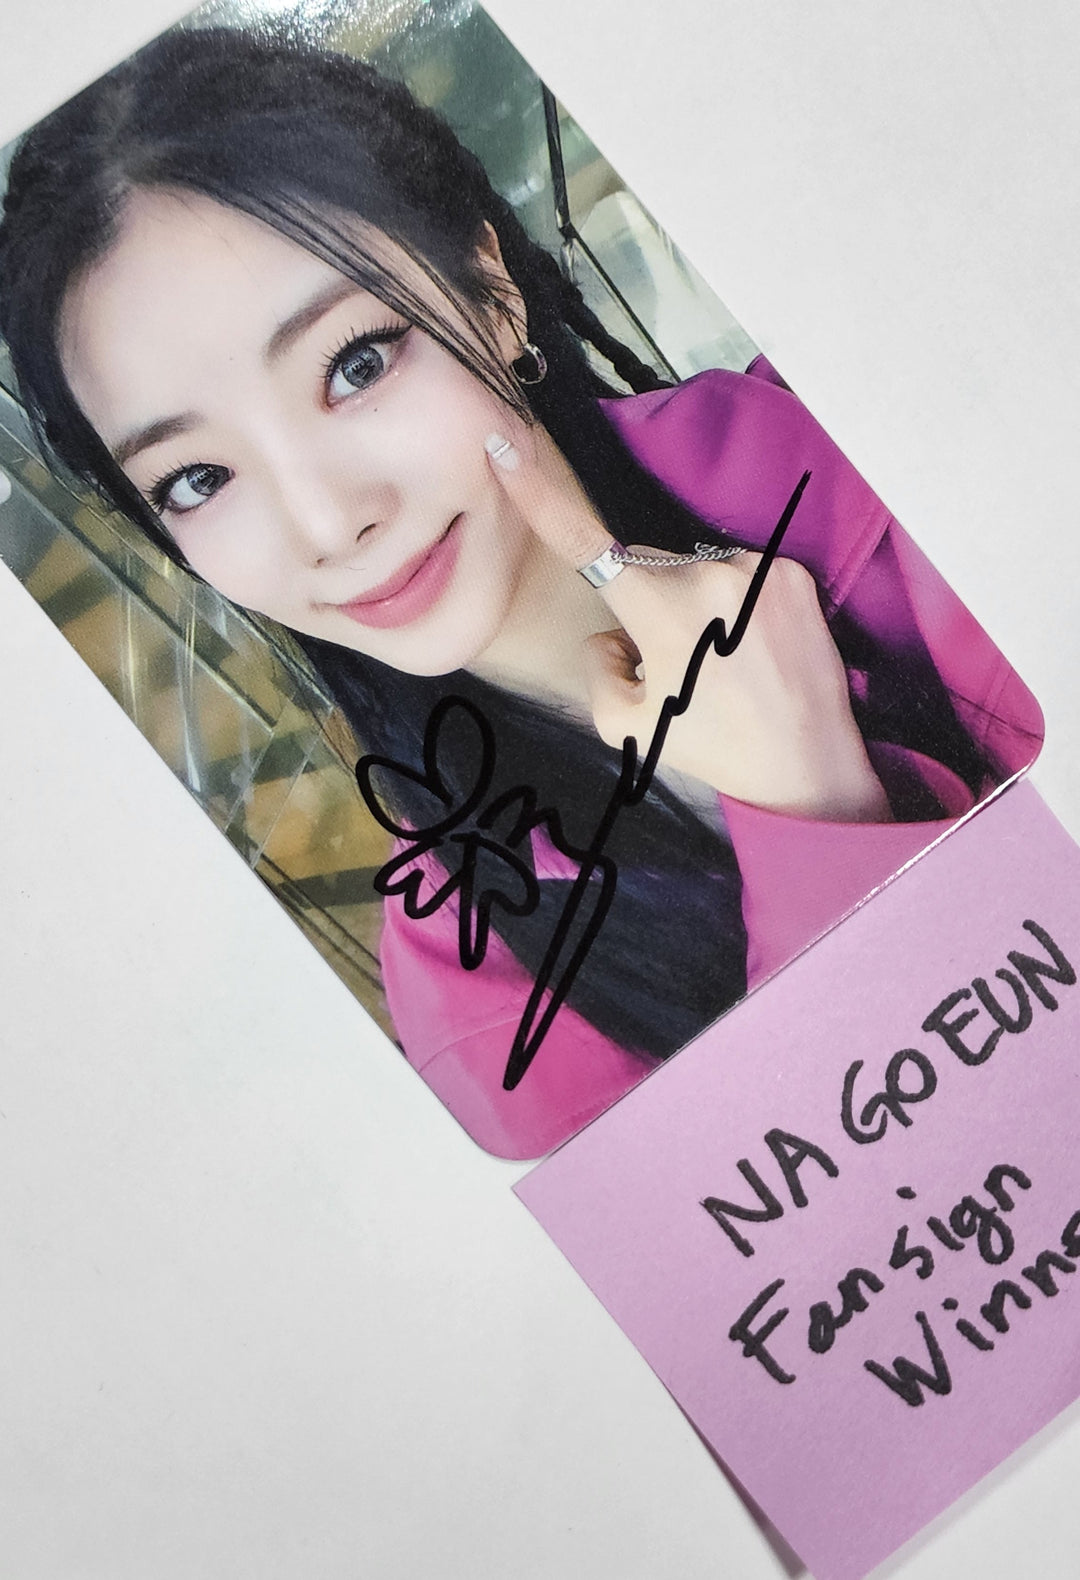 Na Go Eun (of Purple Kiss) “memeM” – Fansign Winner Hand Autographed(Signed) Photocard